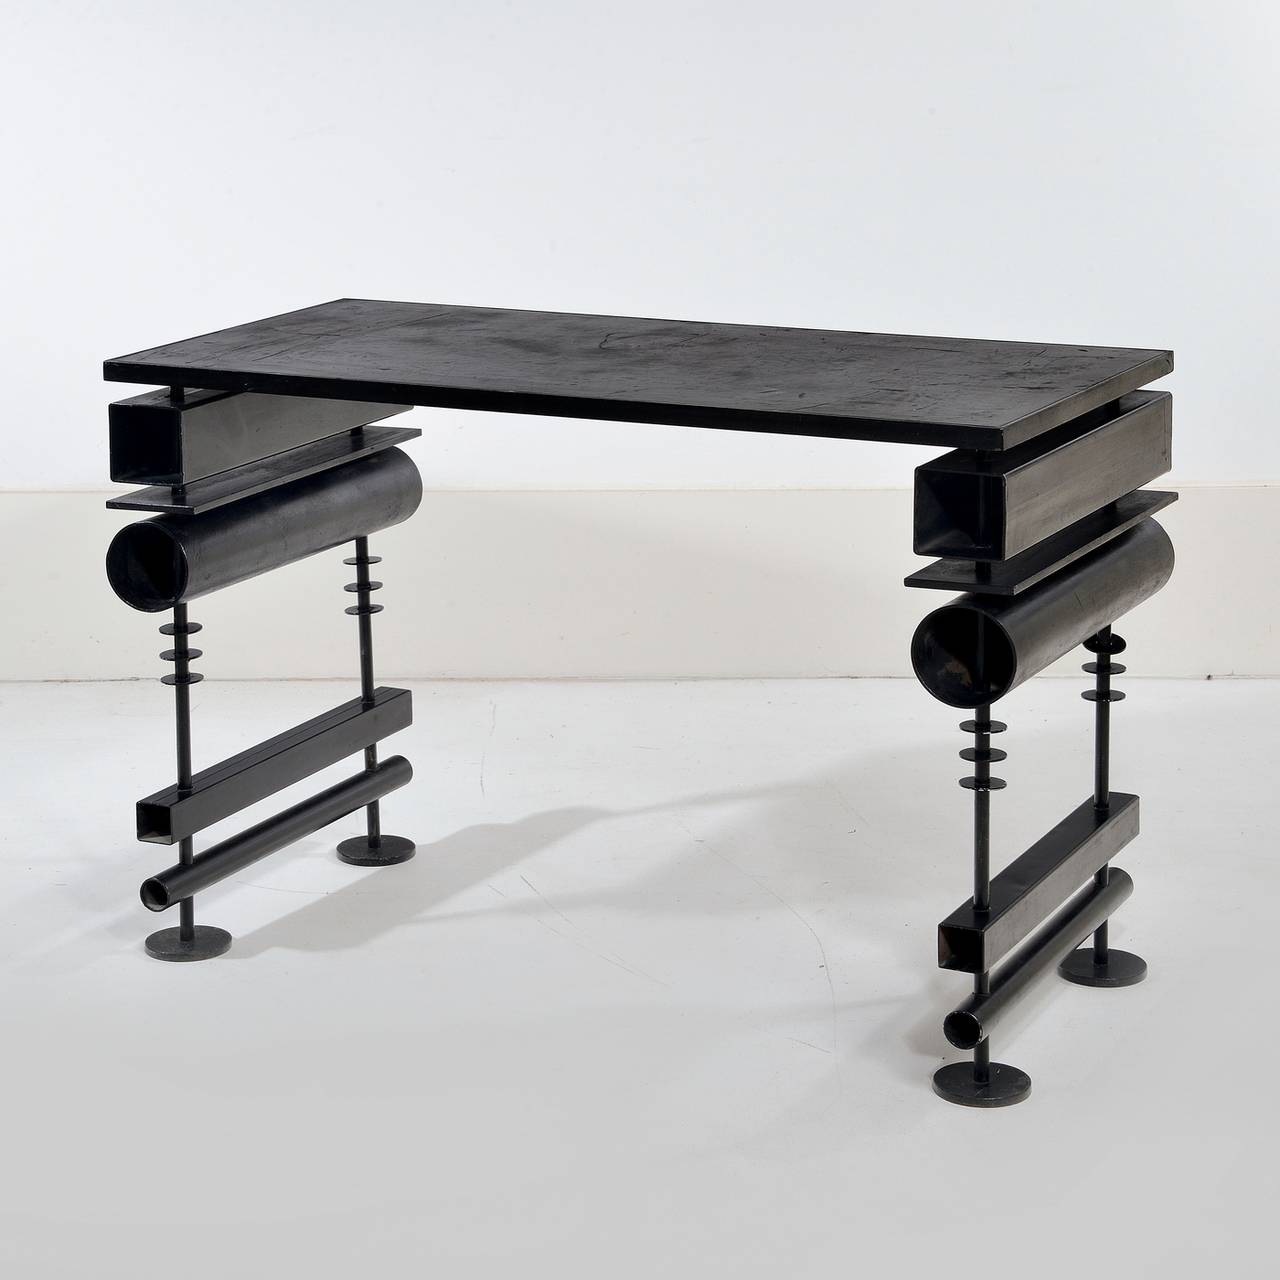 Lacquered metal desk or console designed by Hubert Le Gall (born 1961) designed in 1996. Model 'Fusain' a unique piece.
Bibliographie : J.L. Gaillemin, 